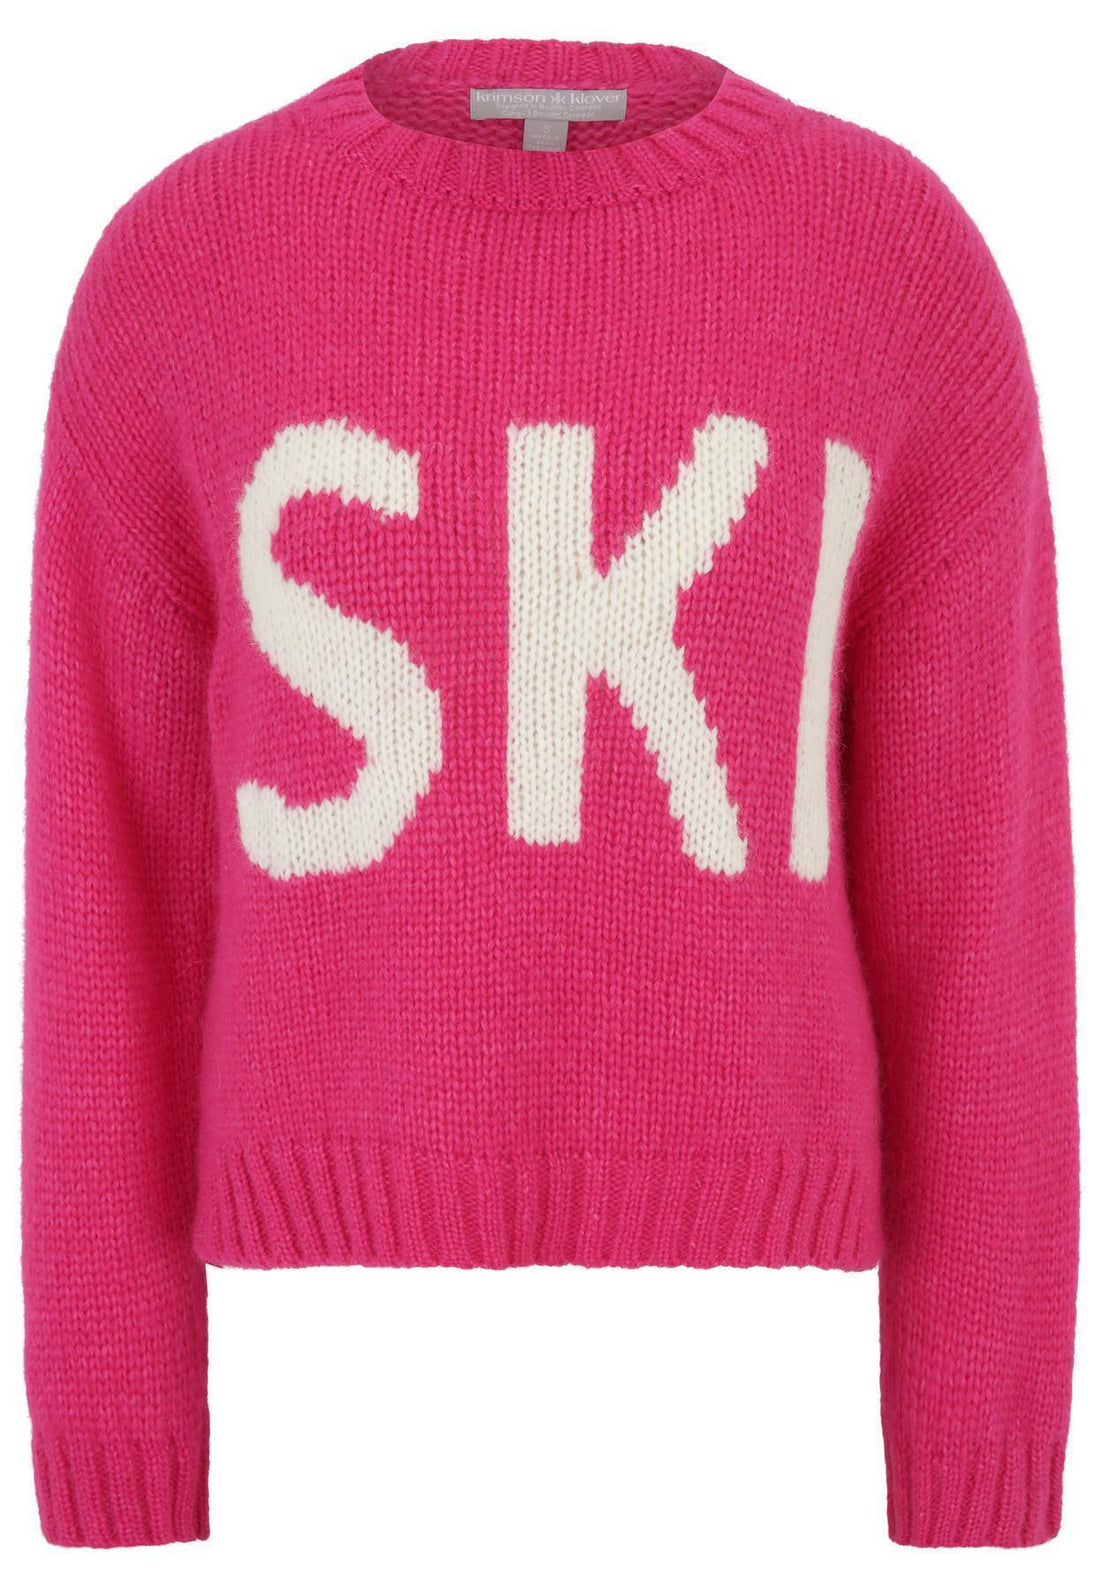 SKI Knitted Sweater Women